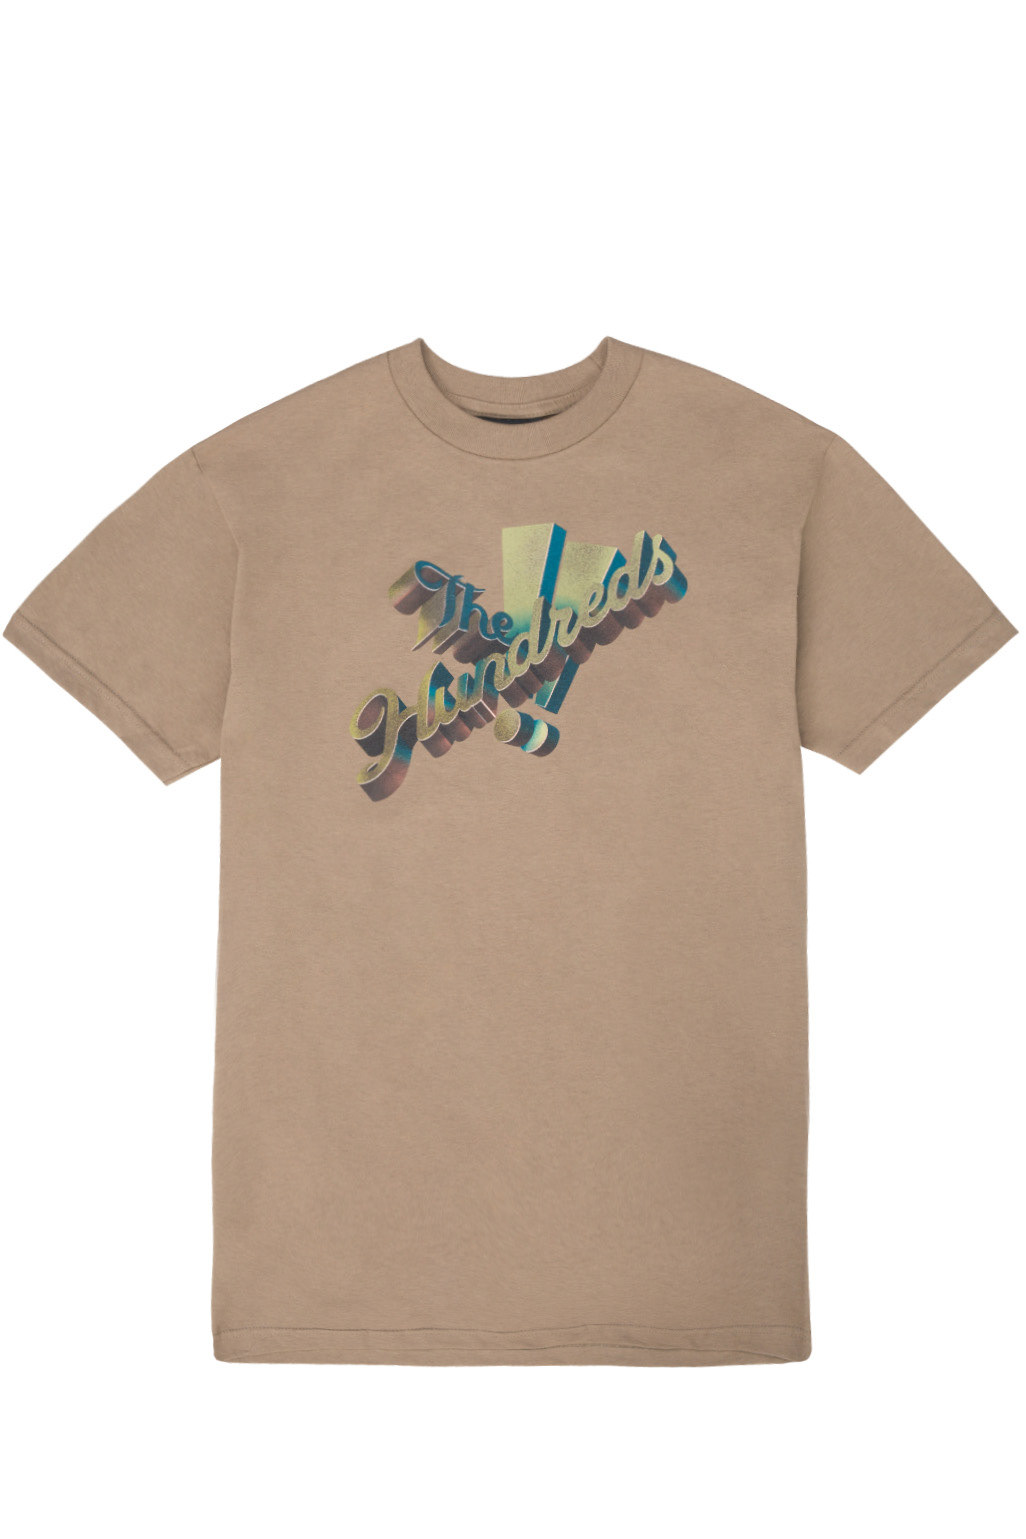 streetwear tshirts graphics Los Angeles designer shirt design logo merchandise lettering